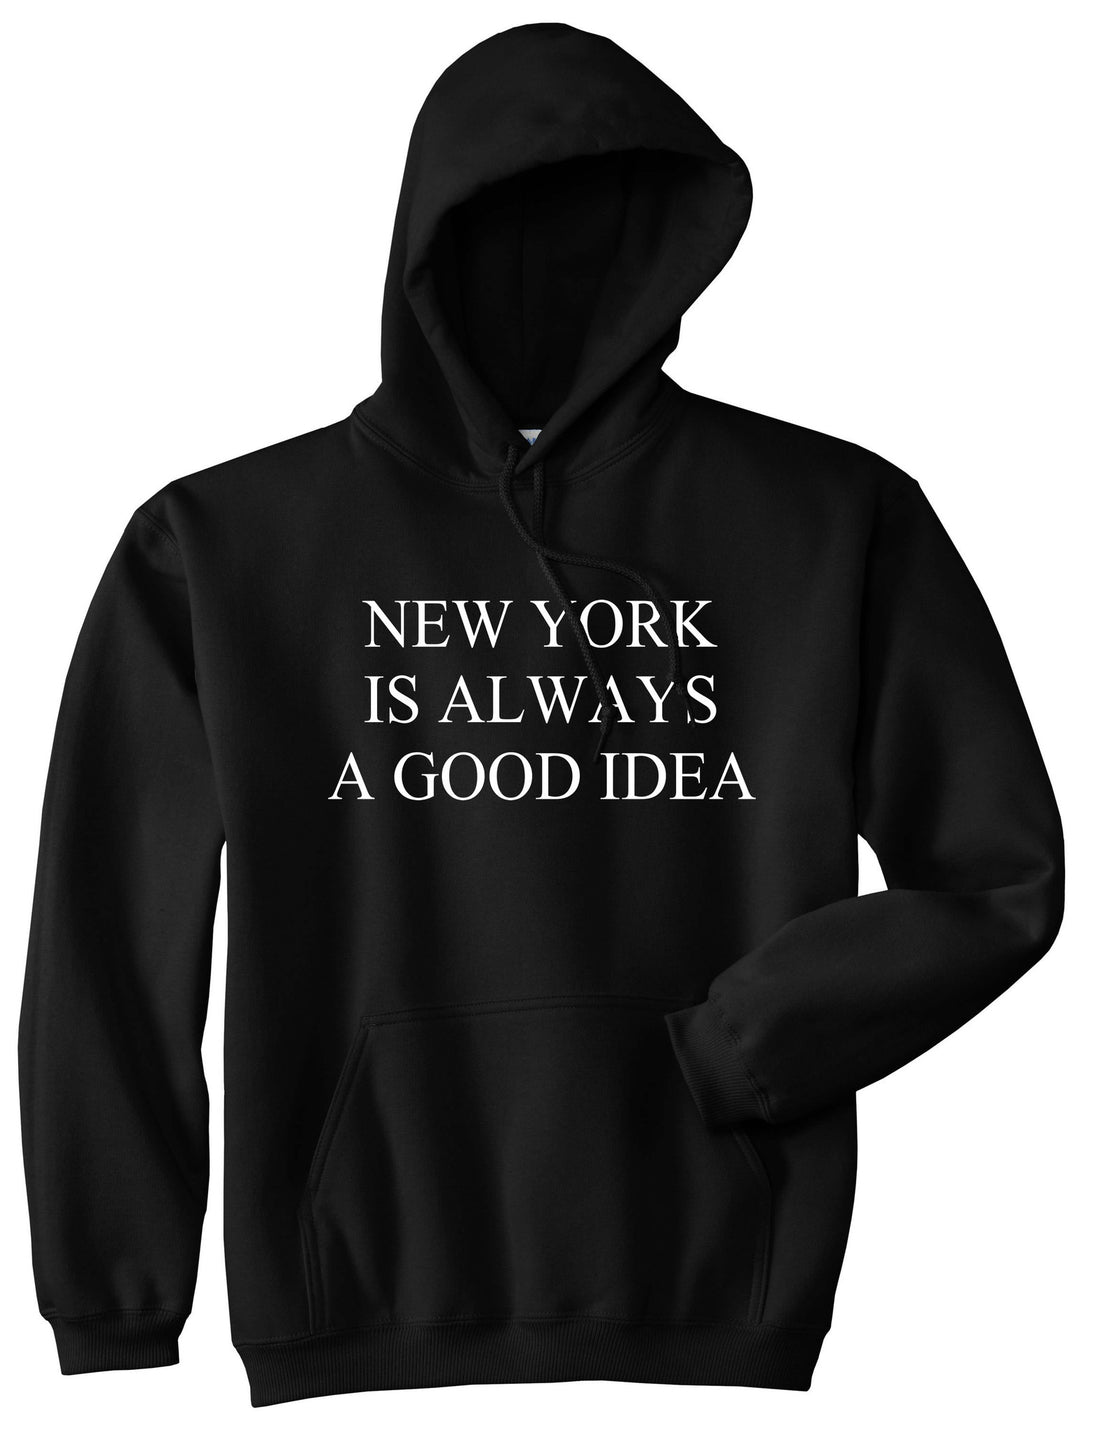 New York Is Always A Good Idea Pullover Hoodie Hoody in Black by Kings Of NY